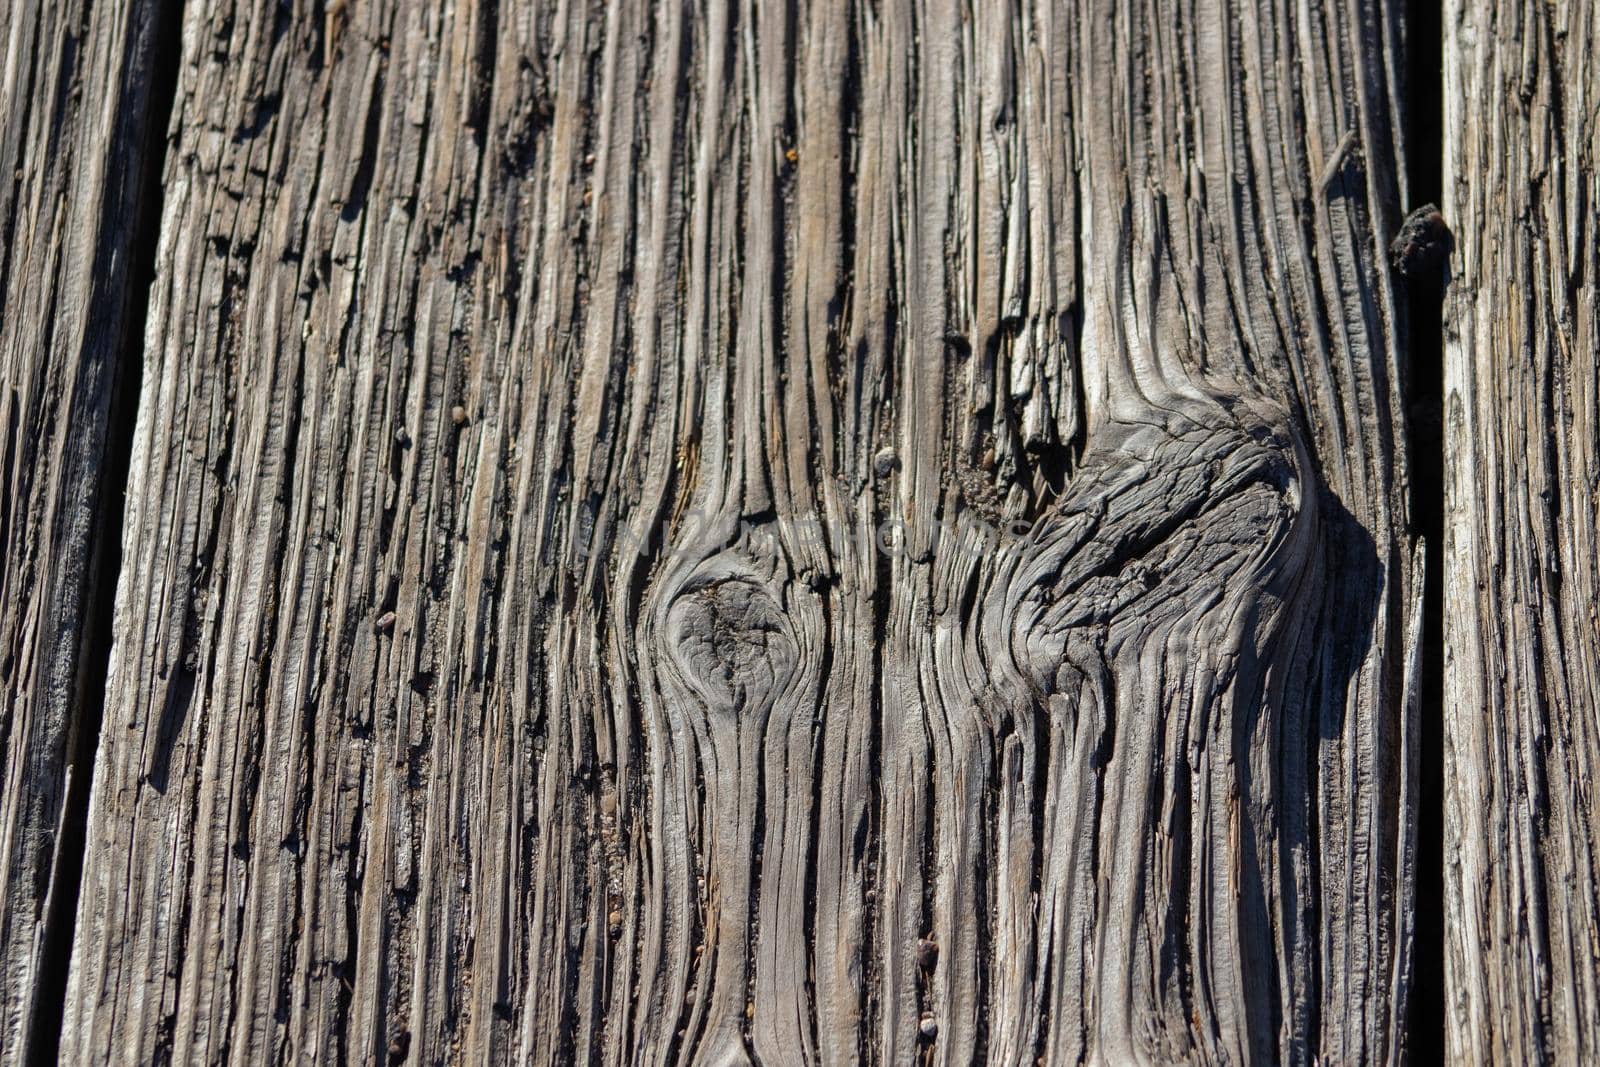 Wood Grain background close up of bridge planks  by gena_wells